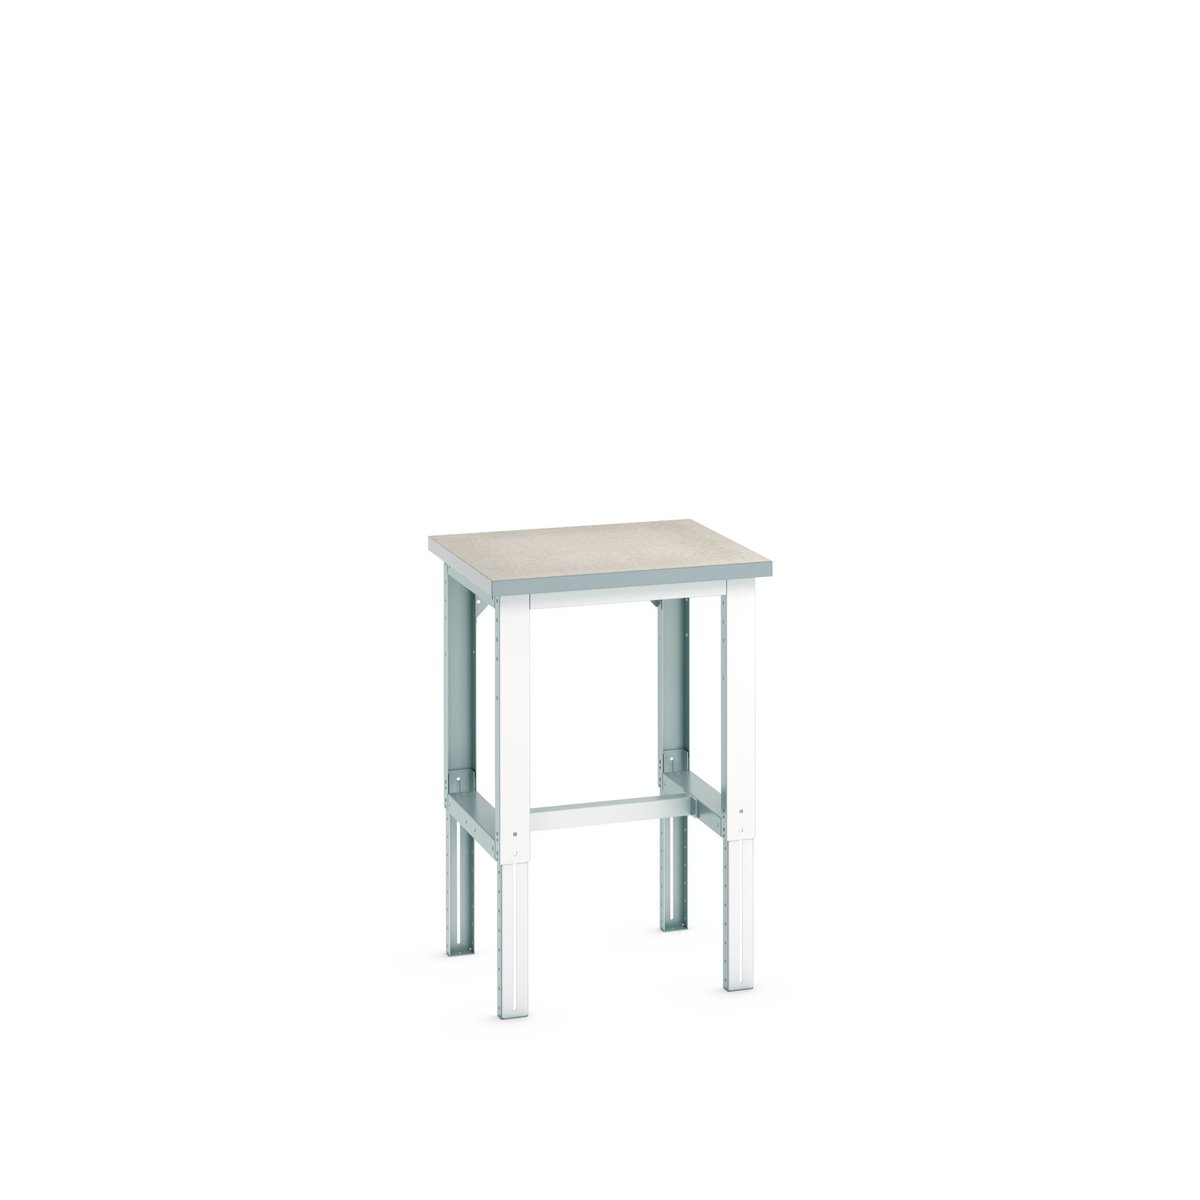 41003048.16V - cubio framework bench adj height (lino)